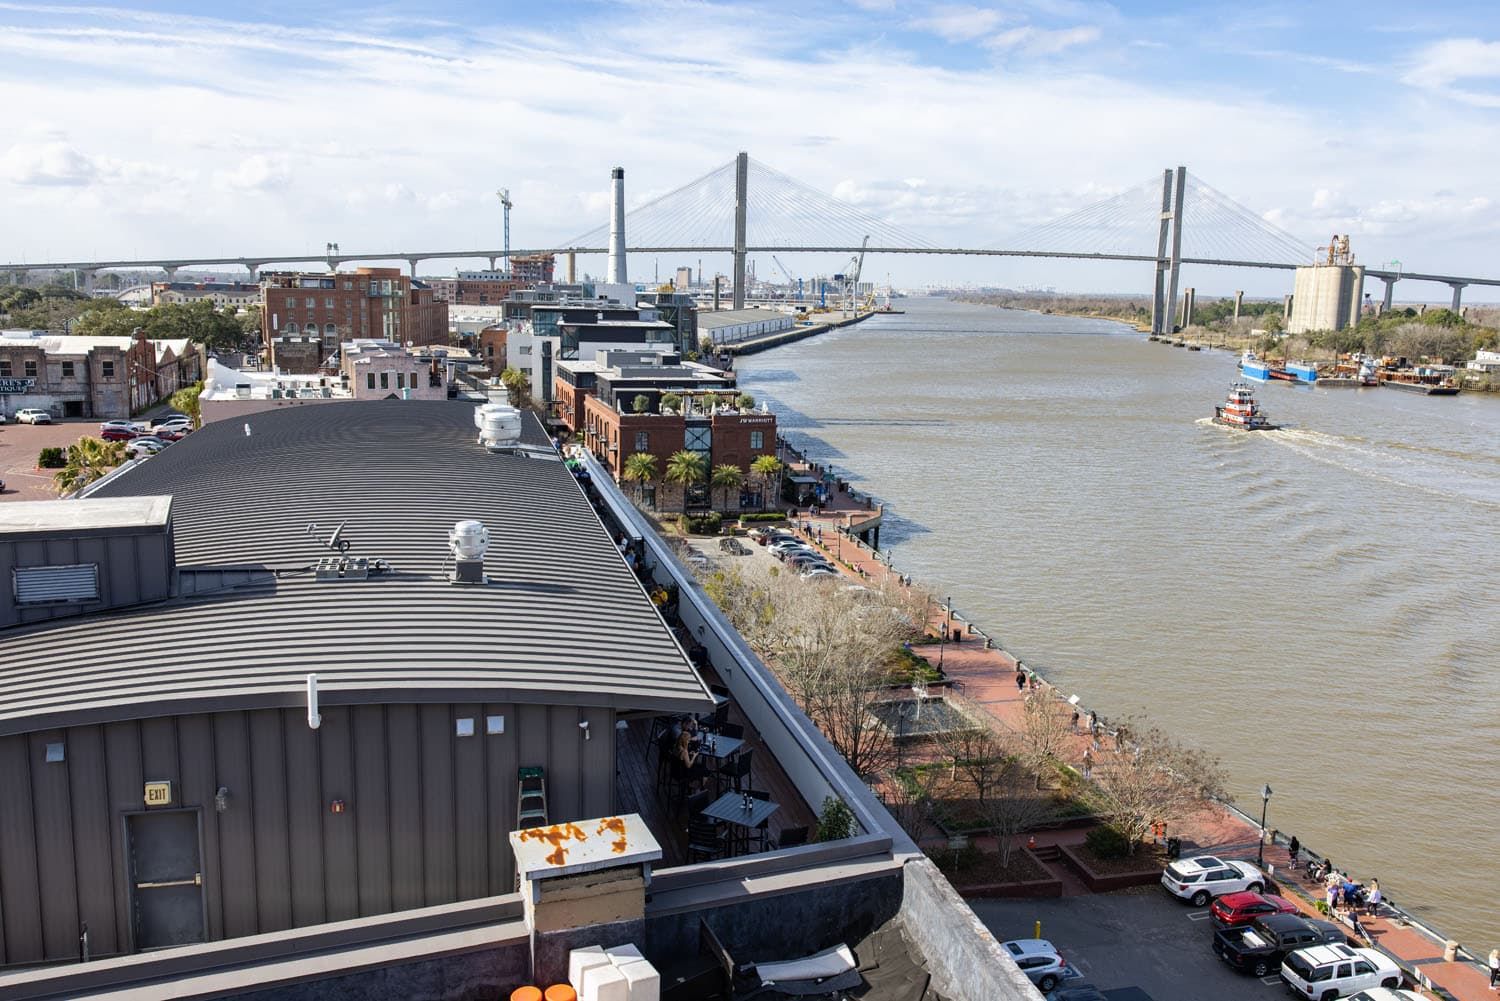 Rocks on the Roof View | Best rooftop bars in Savannah